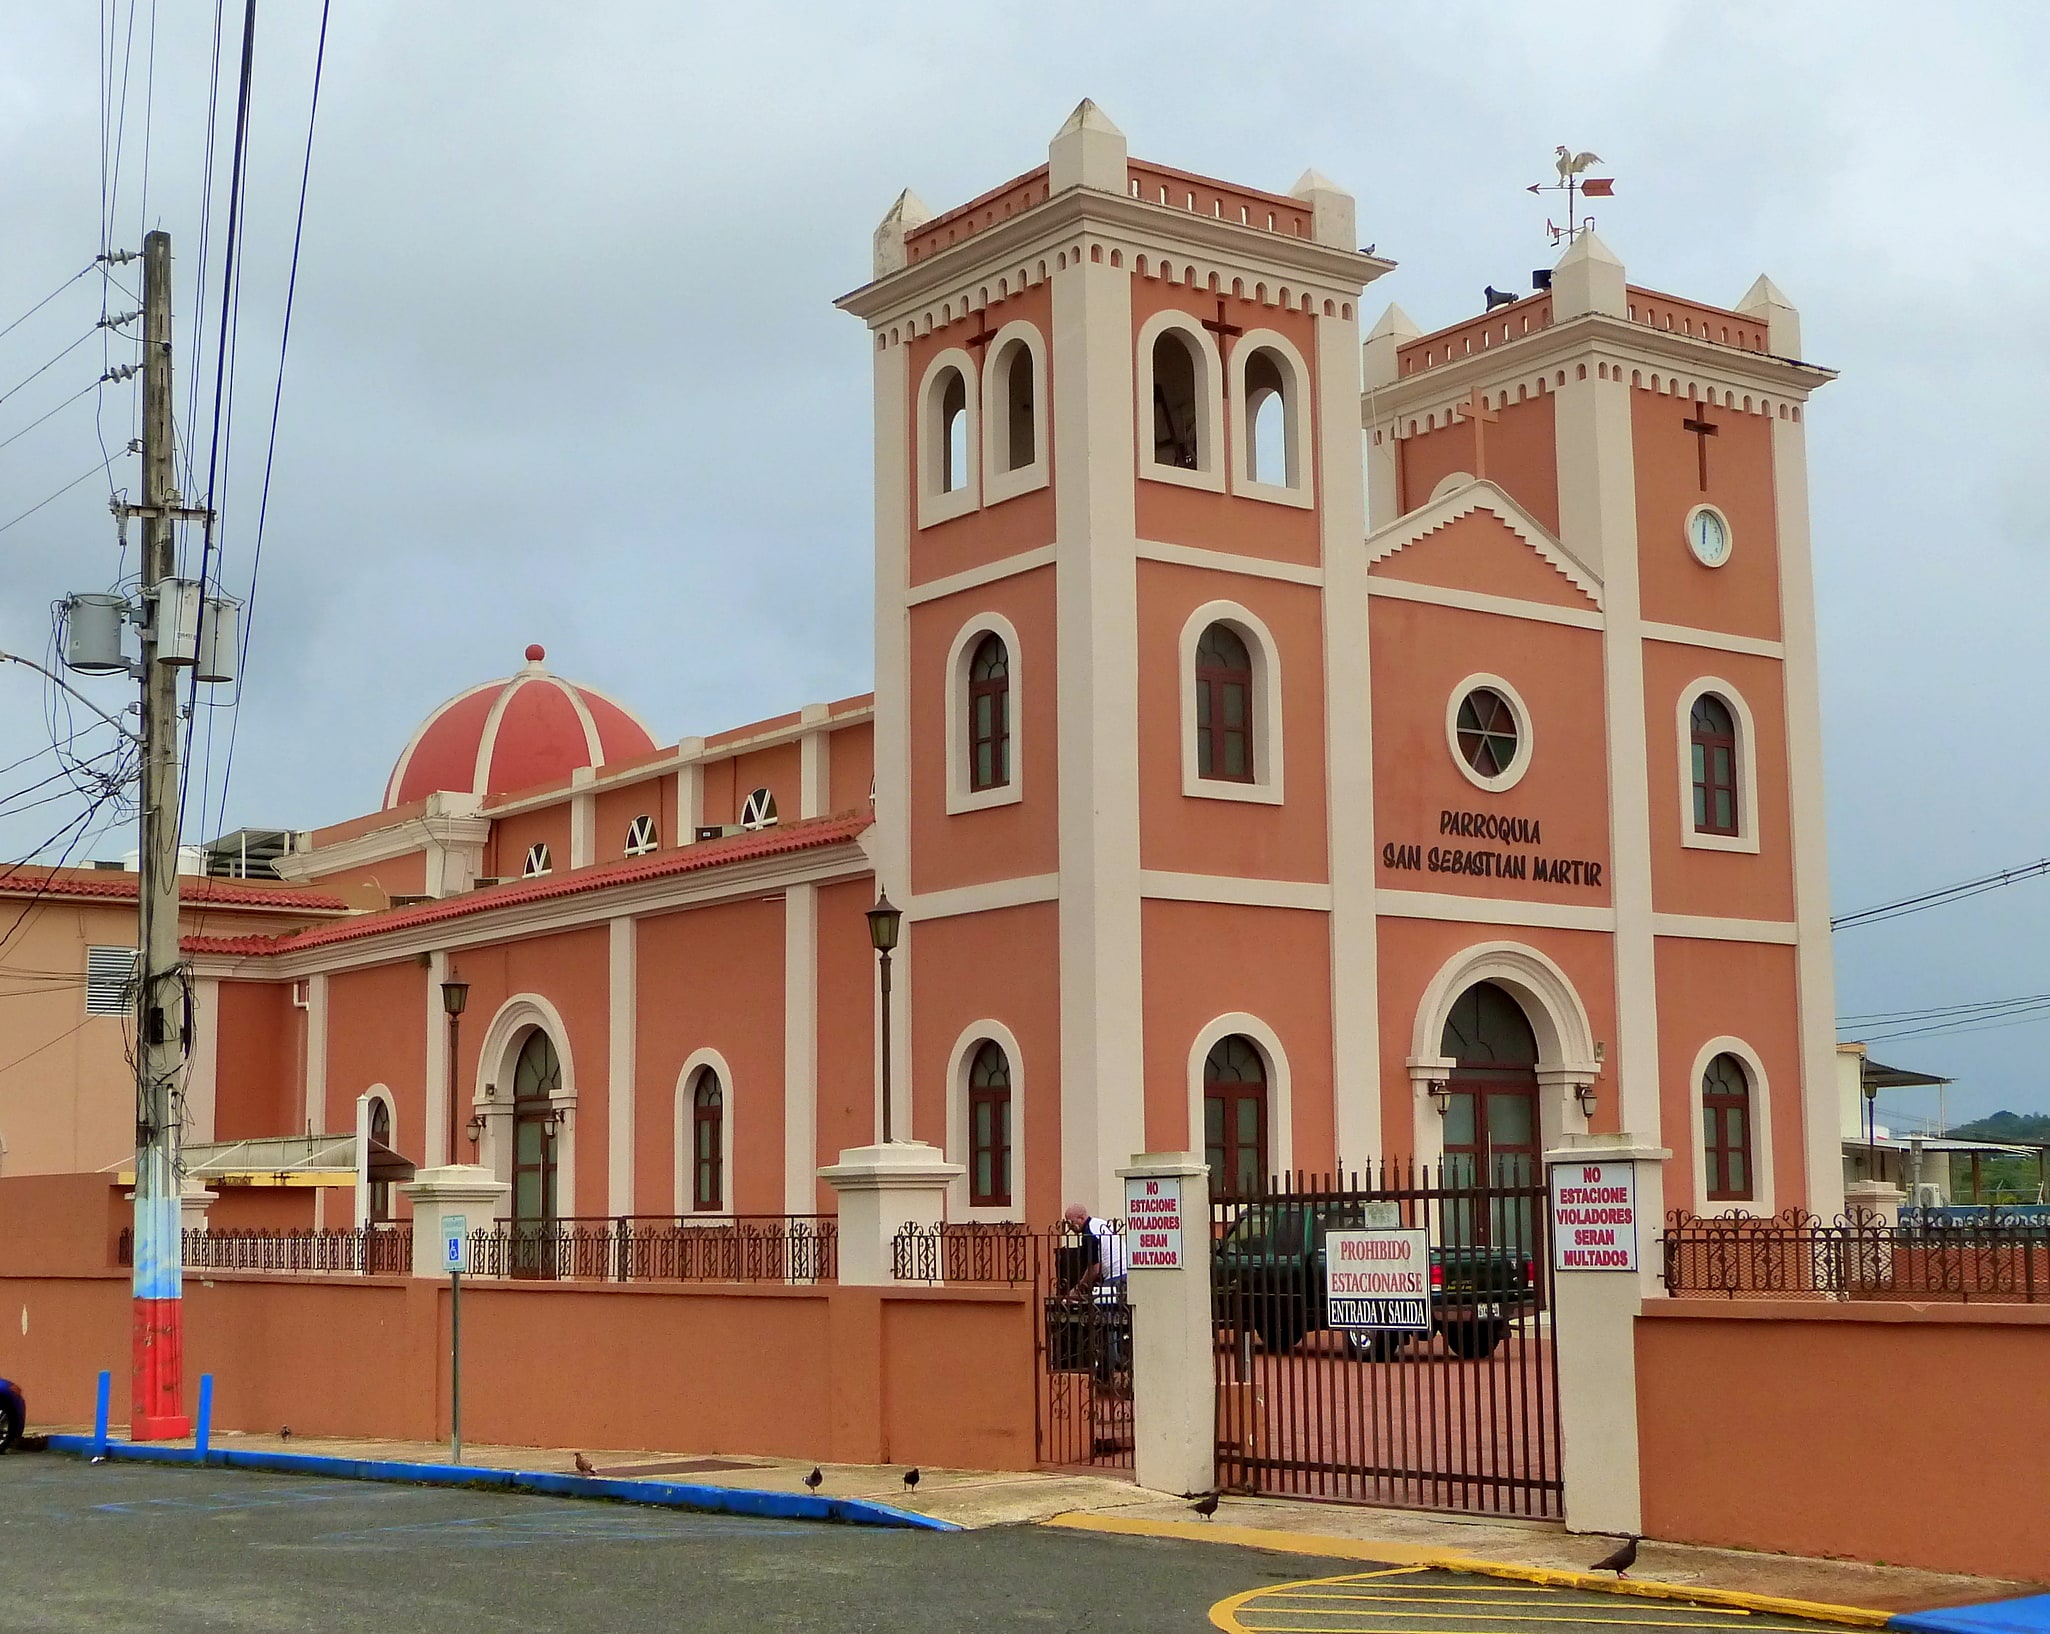 San Sebastián, Portoryko